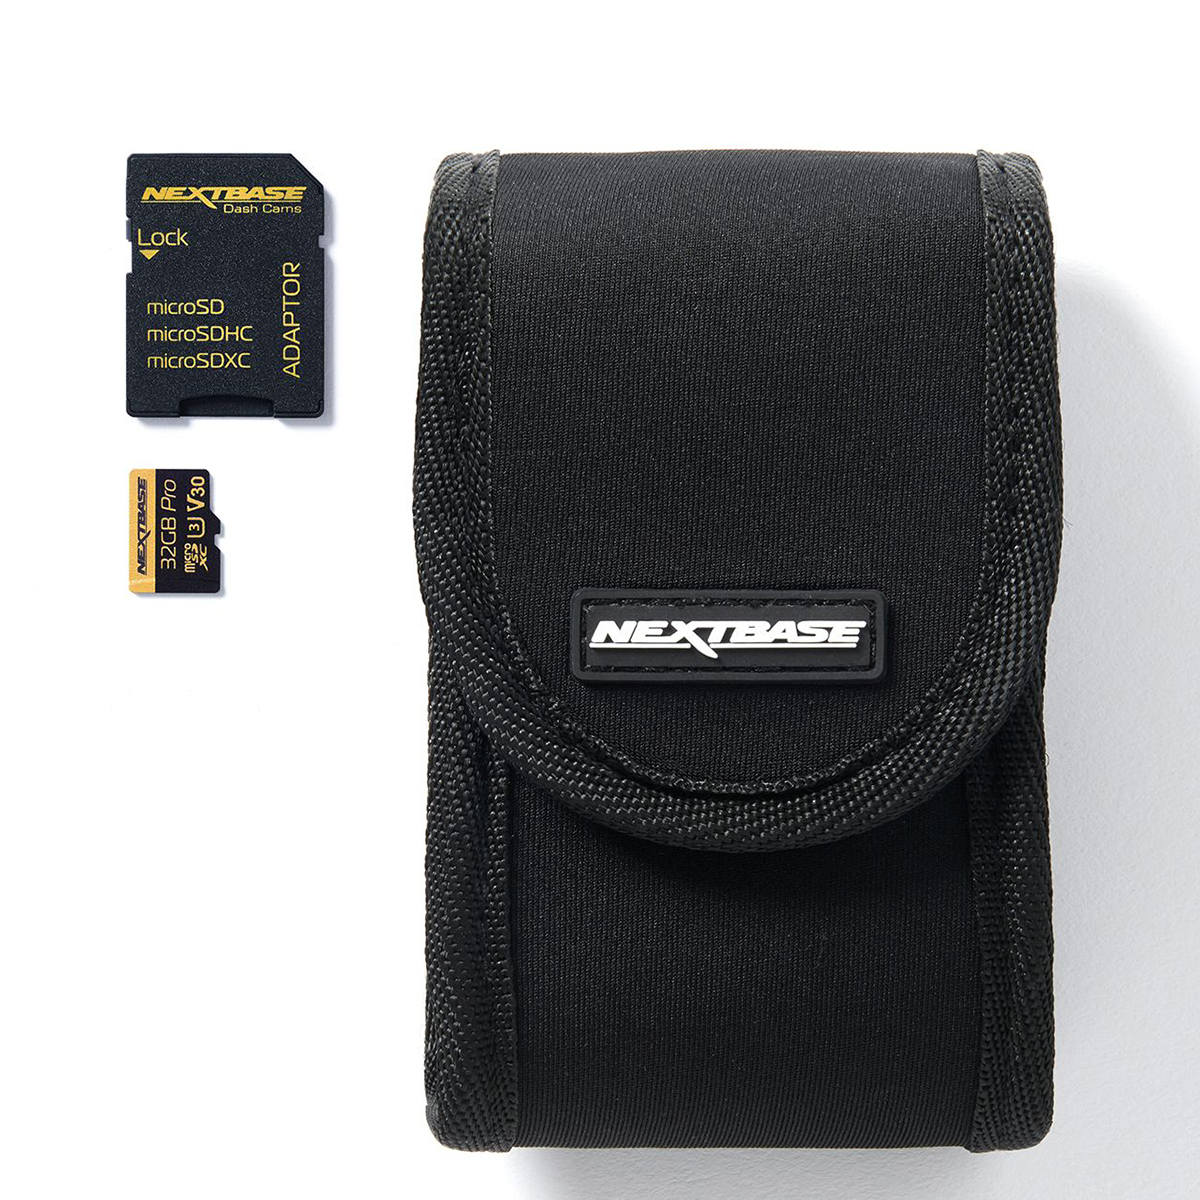 Nextbase 32GB U3 Go Pack DVRS2GP32U3 Dash Cam Protective Case and 32GB SD Card Plus Adapter-Black